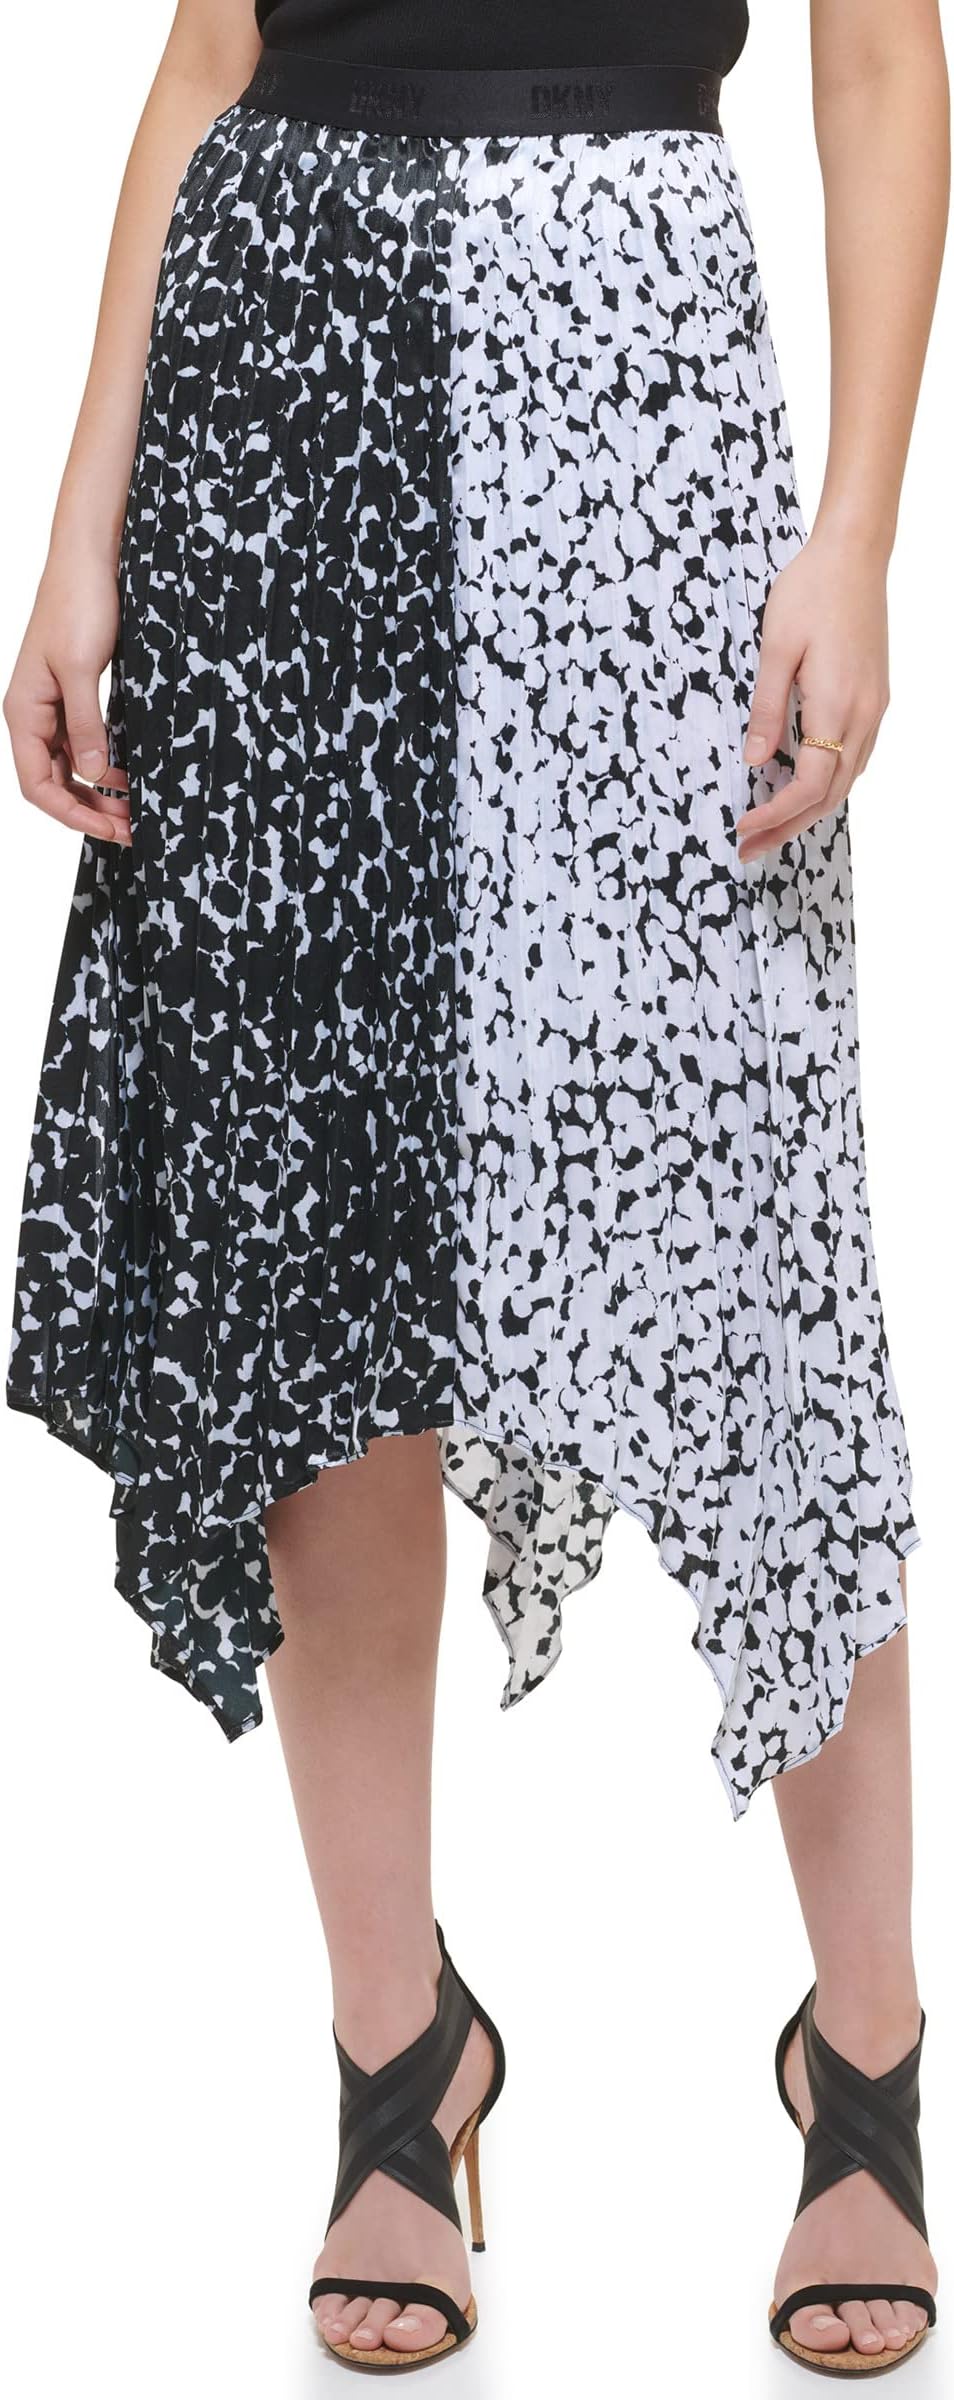 цена Асимметричная юбка с цветными блоками и асимметричным принтом без застежки DKNY, цвет Black/White/White/Black